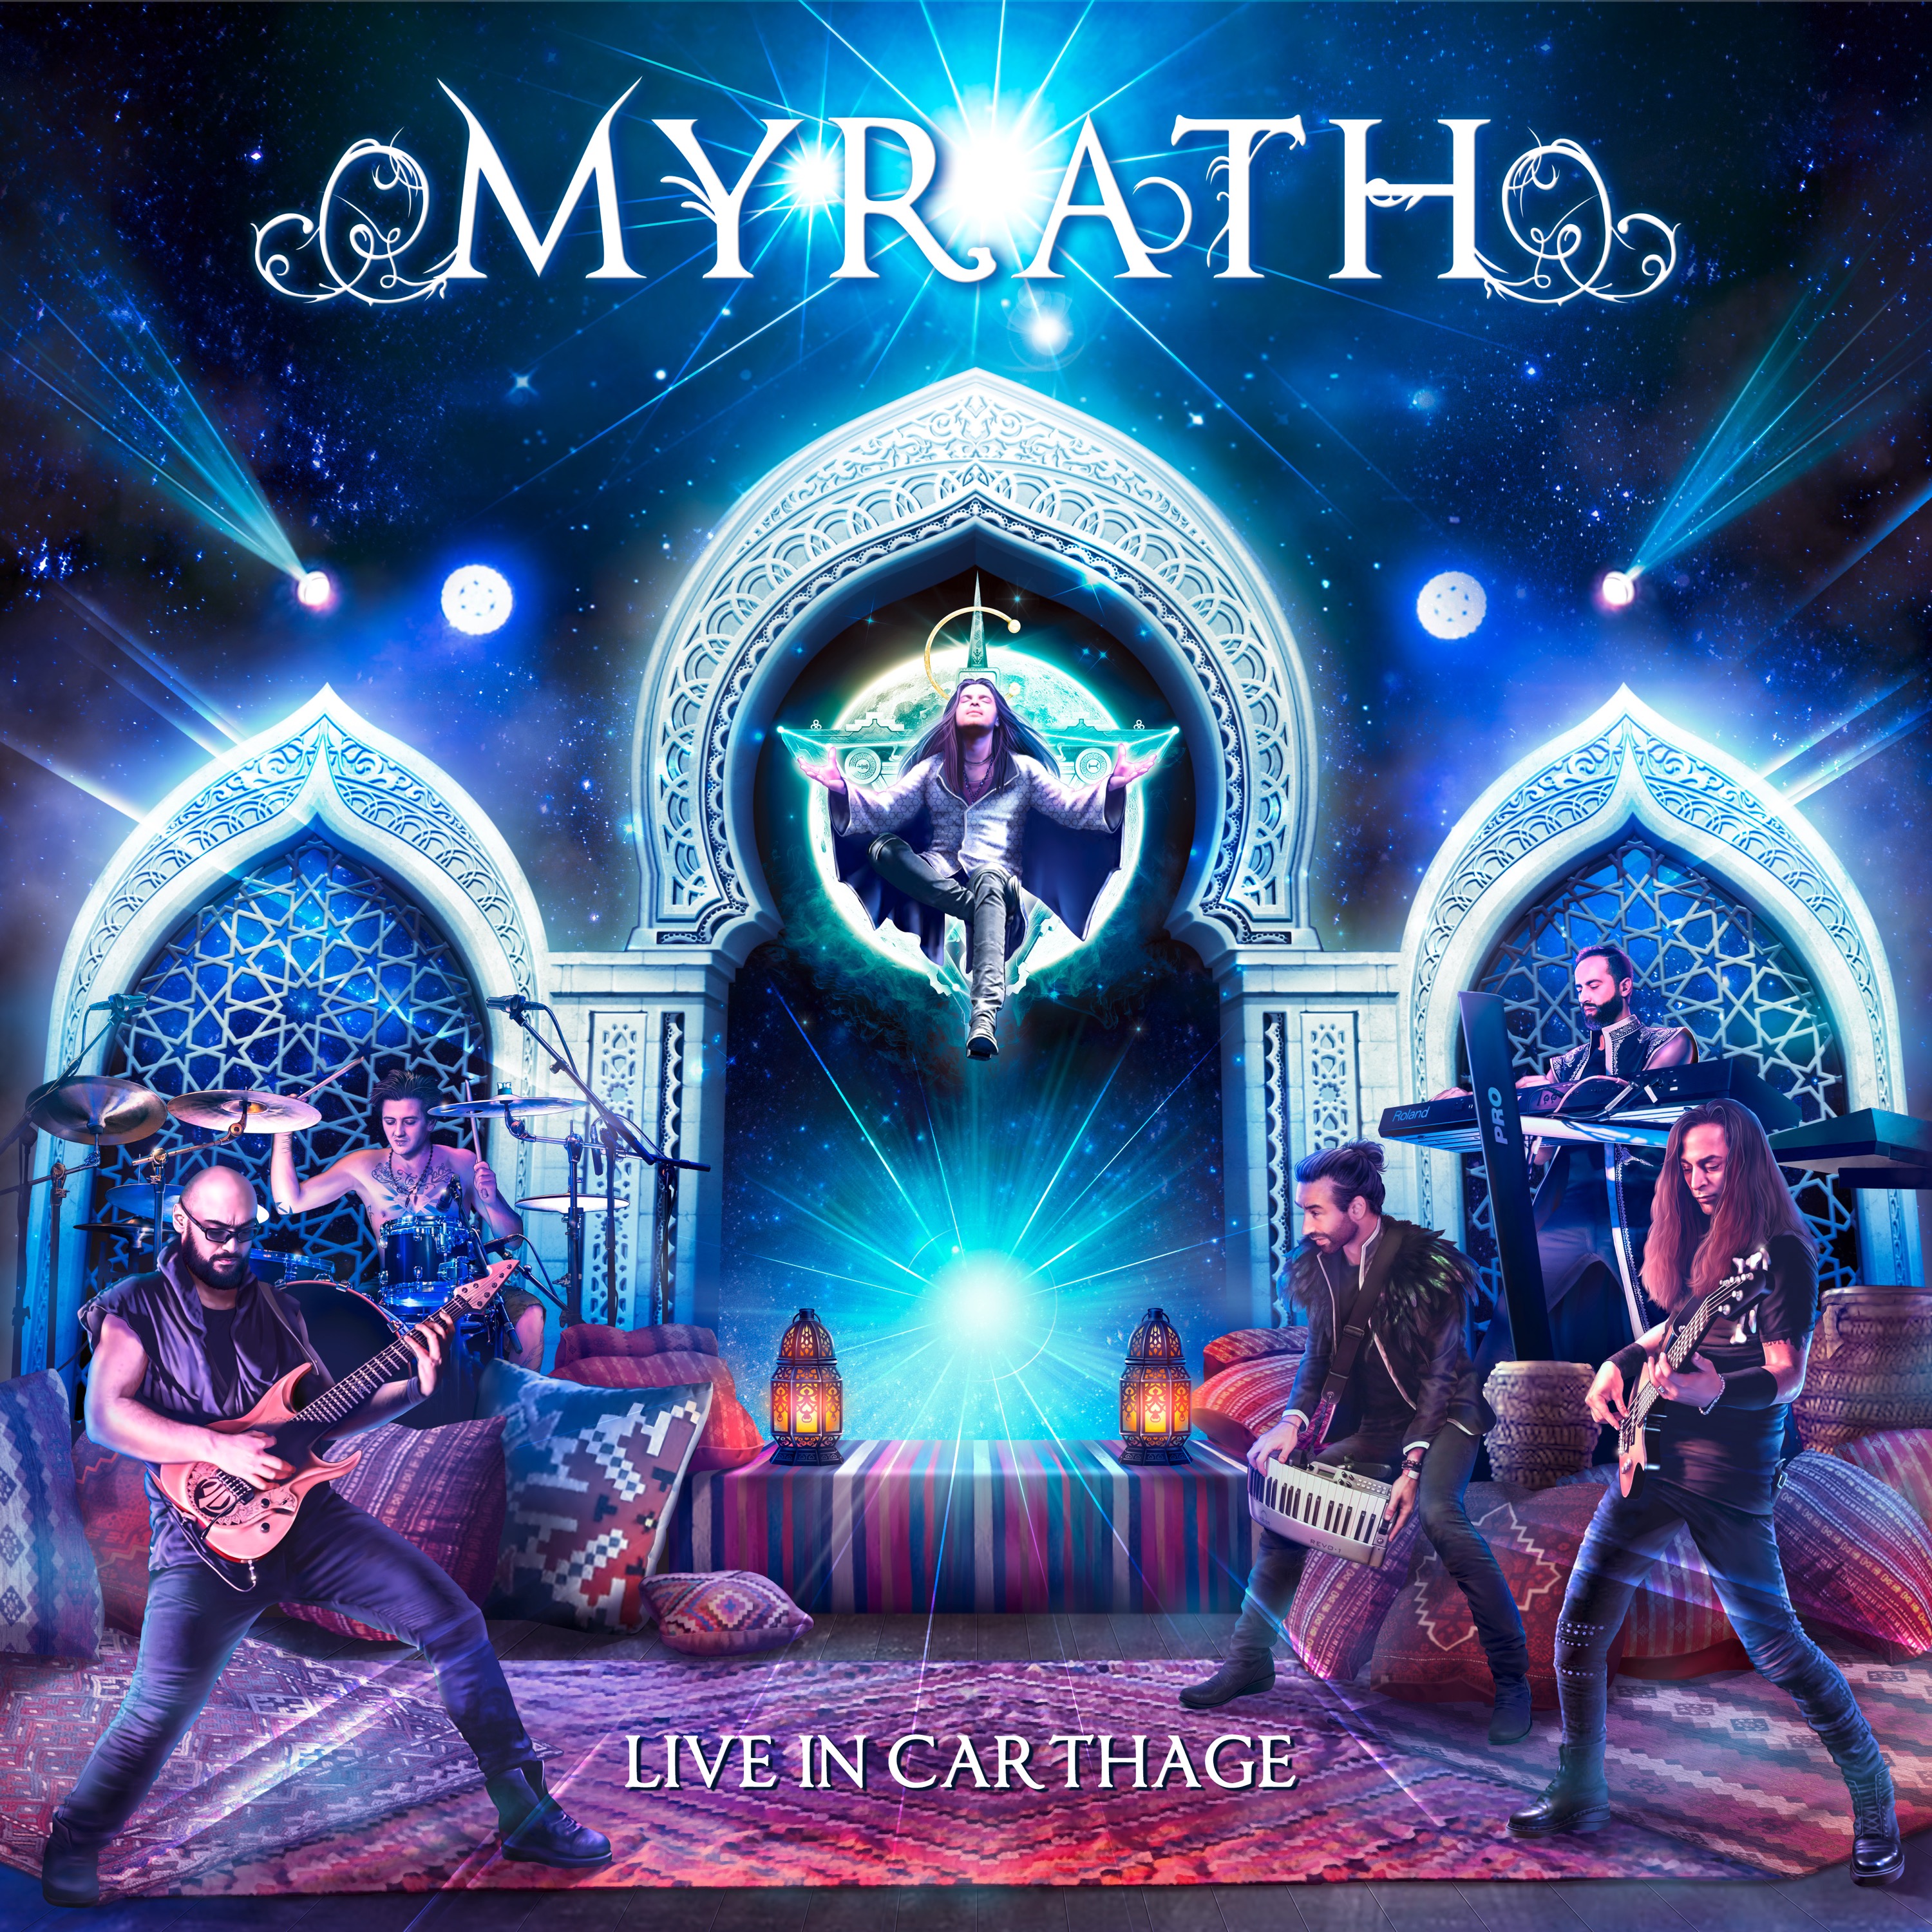 Myrath - Live in Carthage - CD+DVD